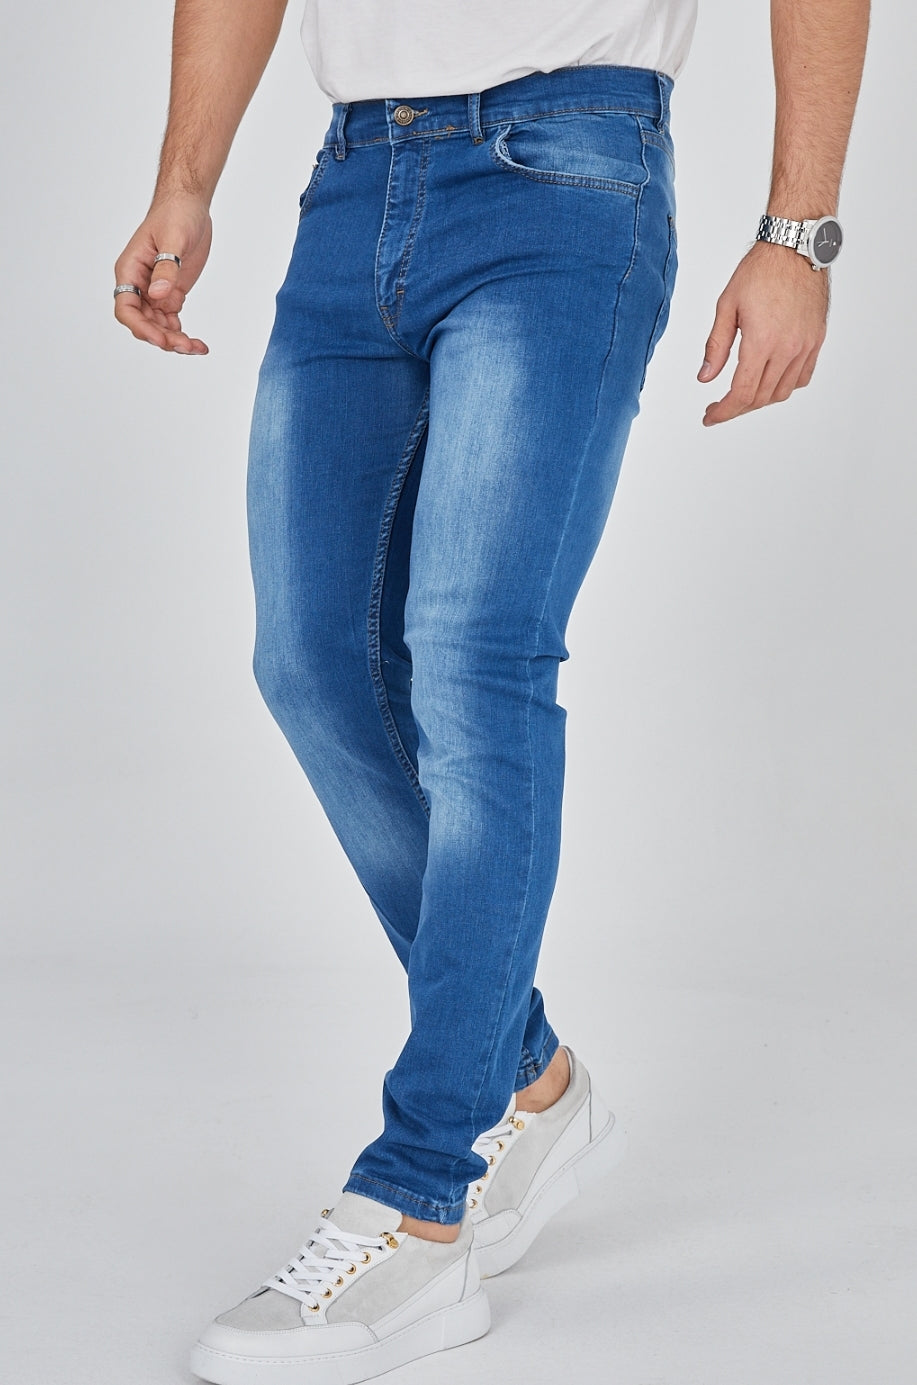 Rodri Jeans Light Blue